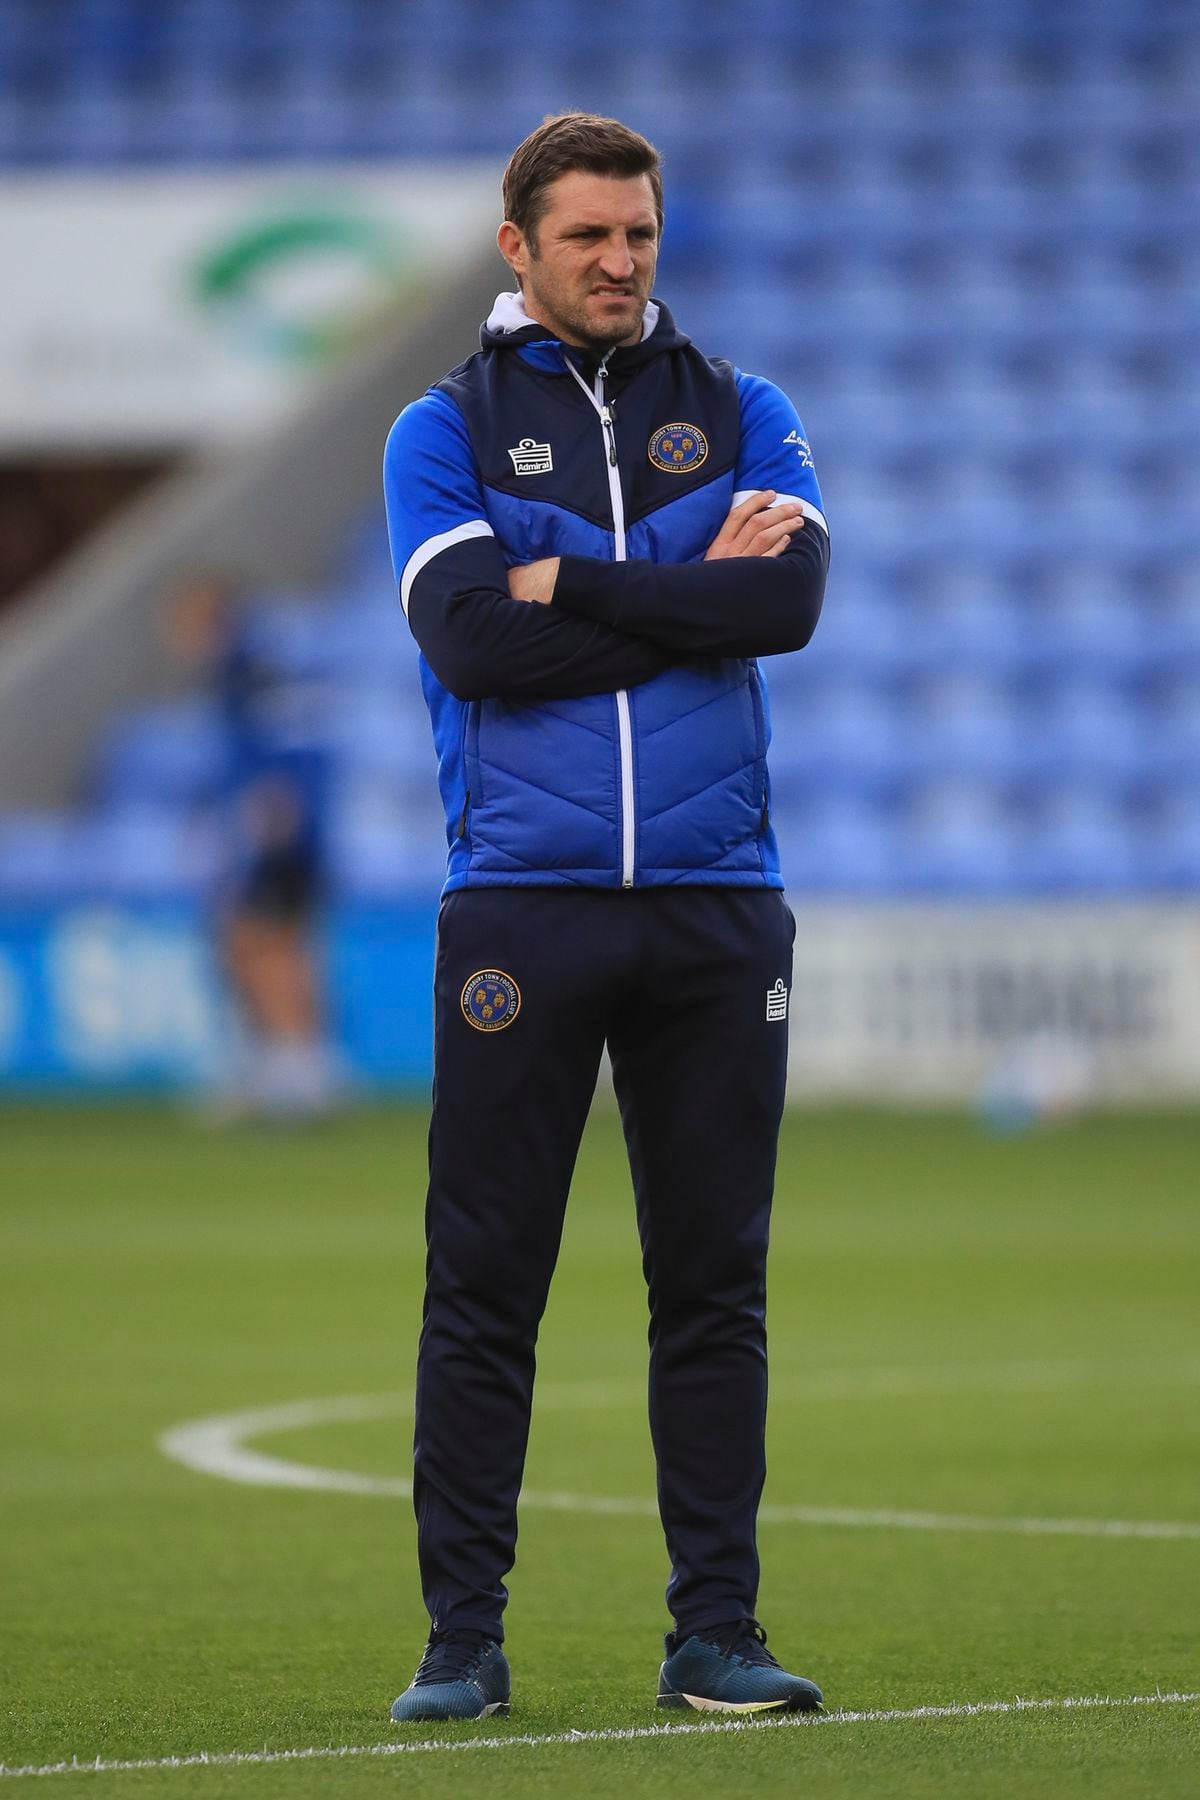 Sam Ricketts the head coach / manager of Shrewsbury Town. (AMA)